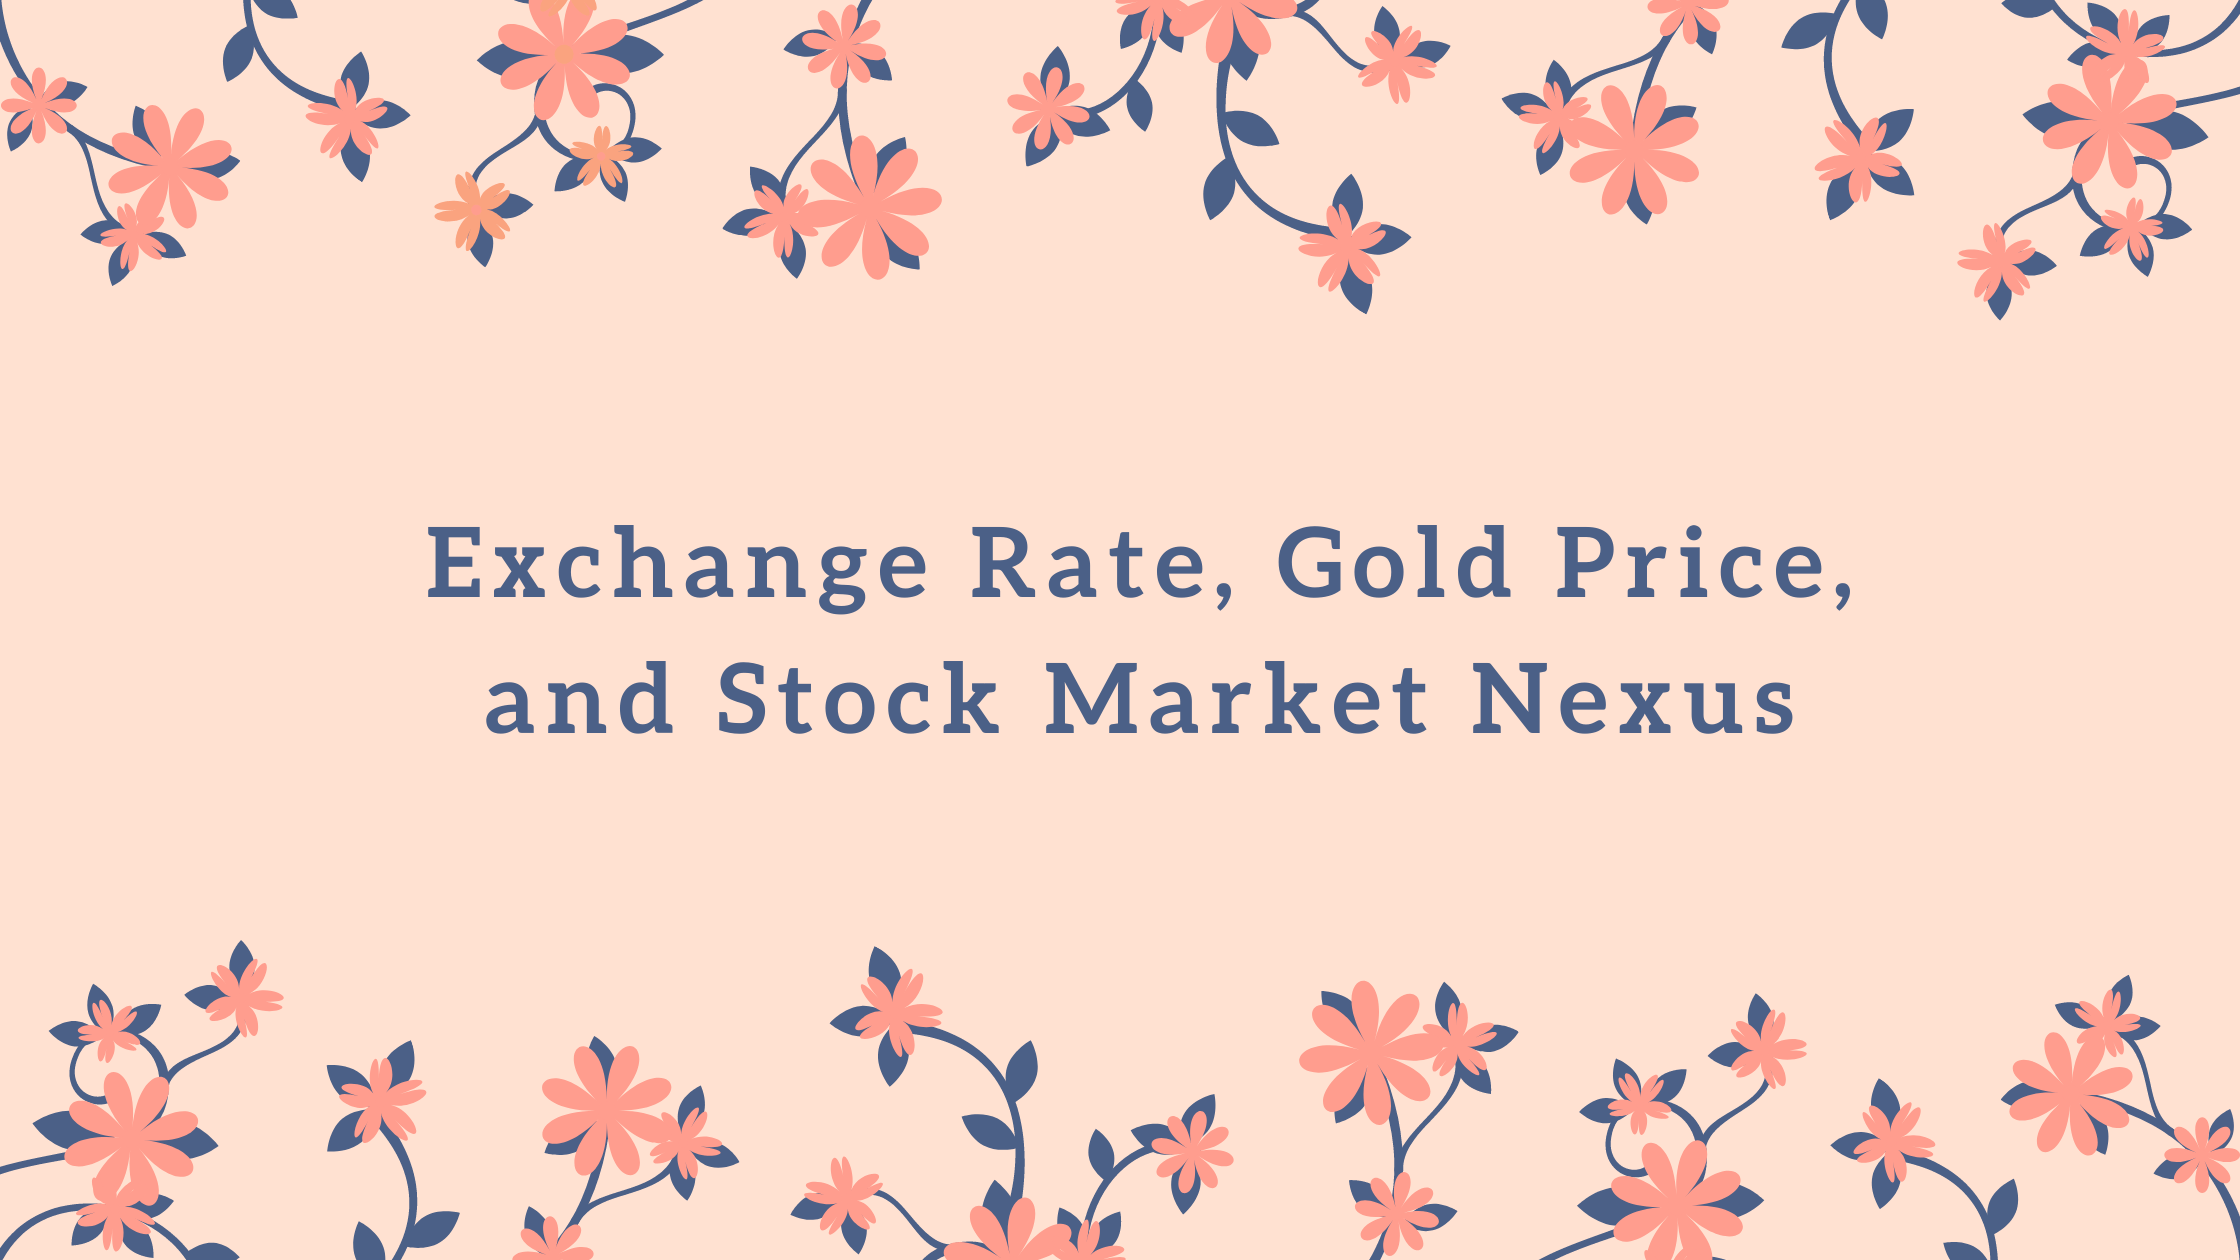 Gold Price and Stock Market Nexus